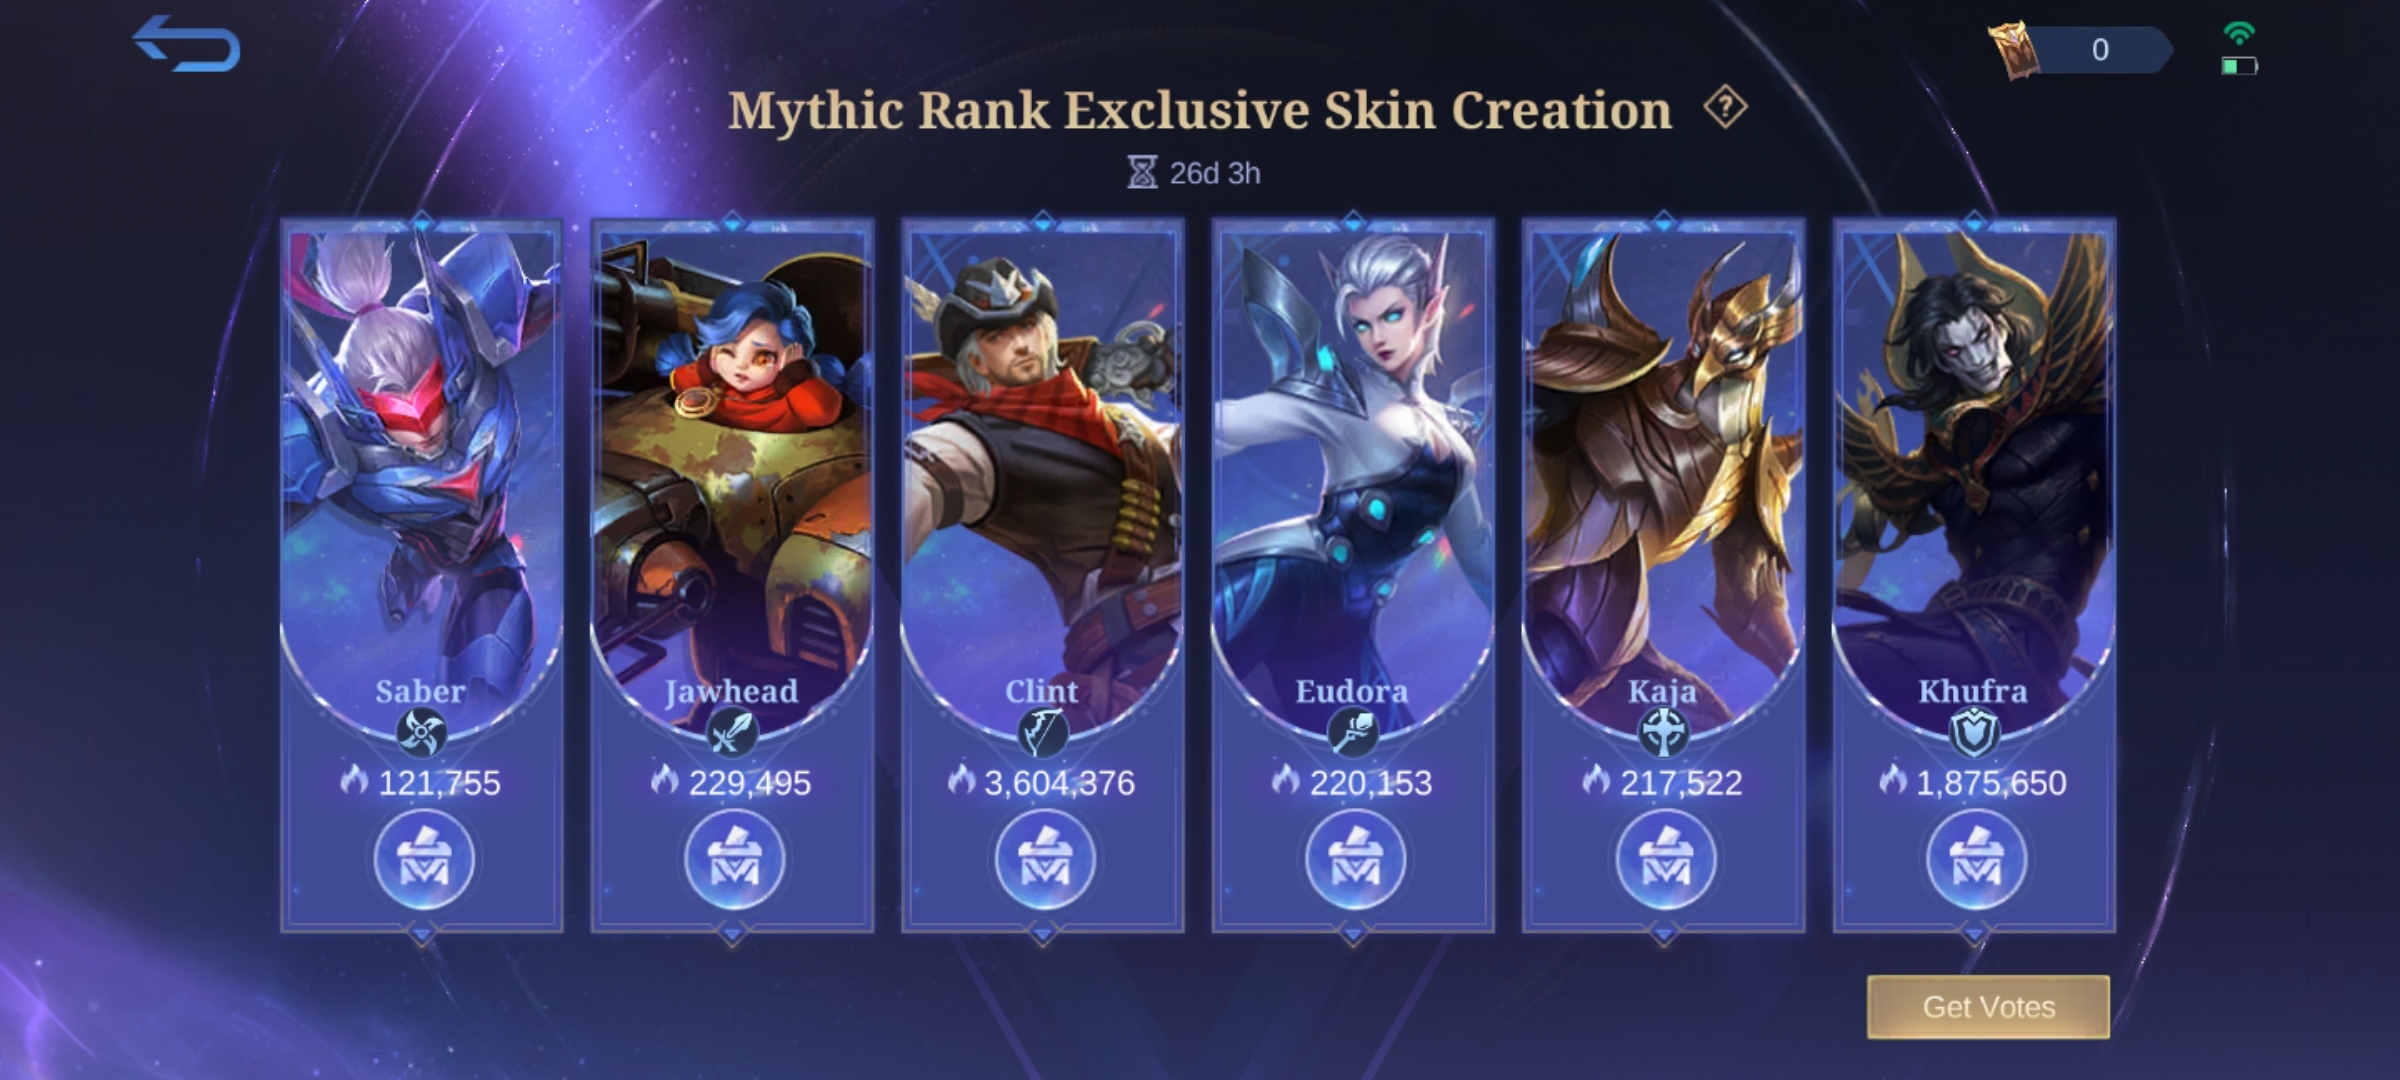 MLBB Mythic Rank Exclusive Skin Creation